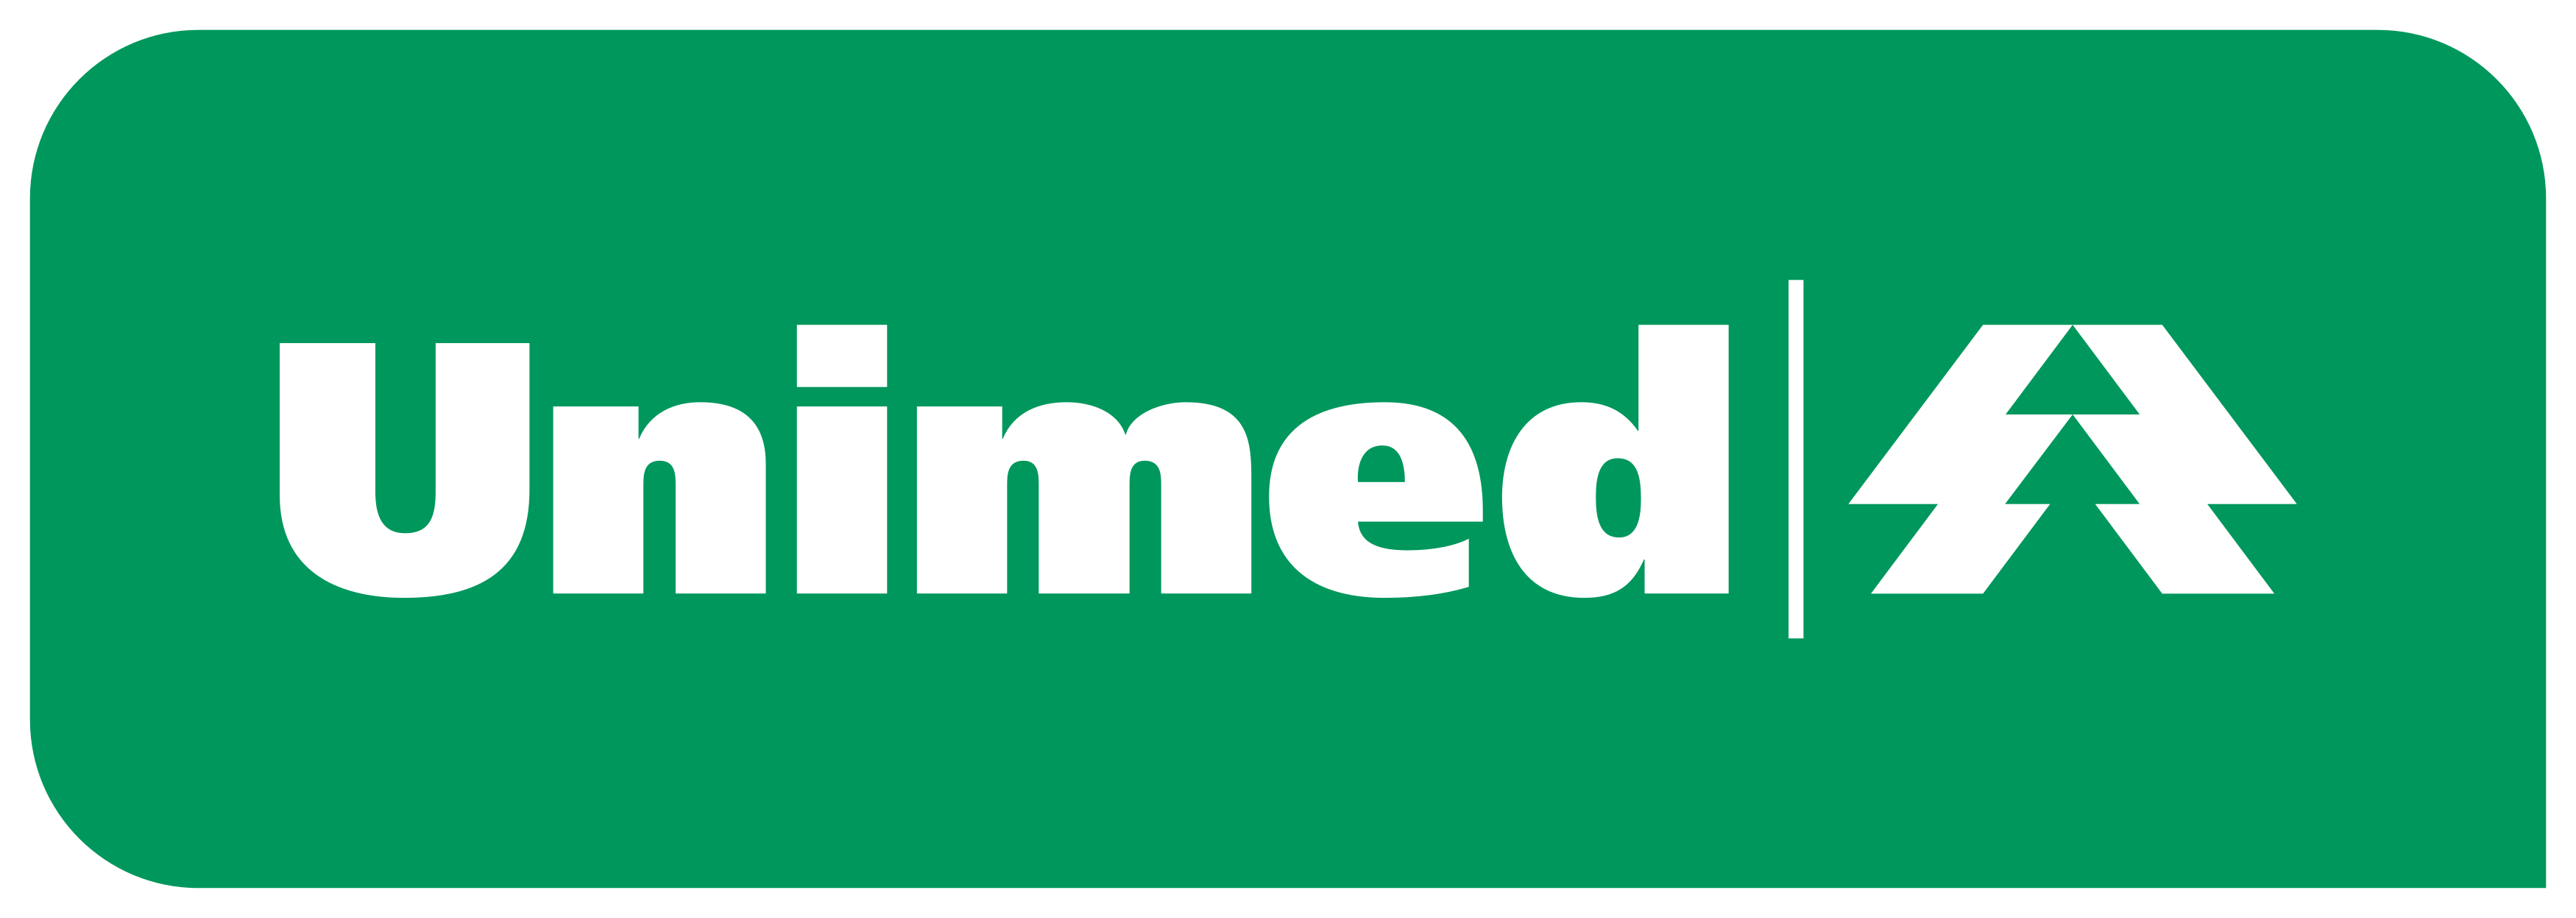 unimed logo 1 1